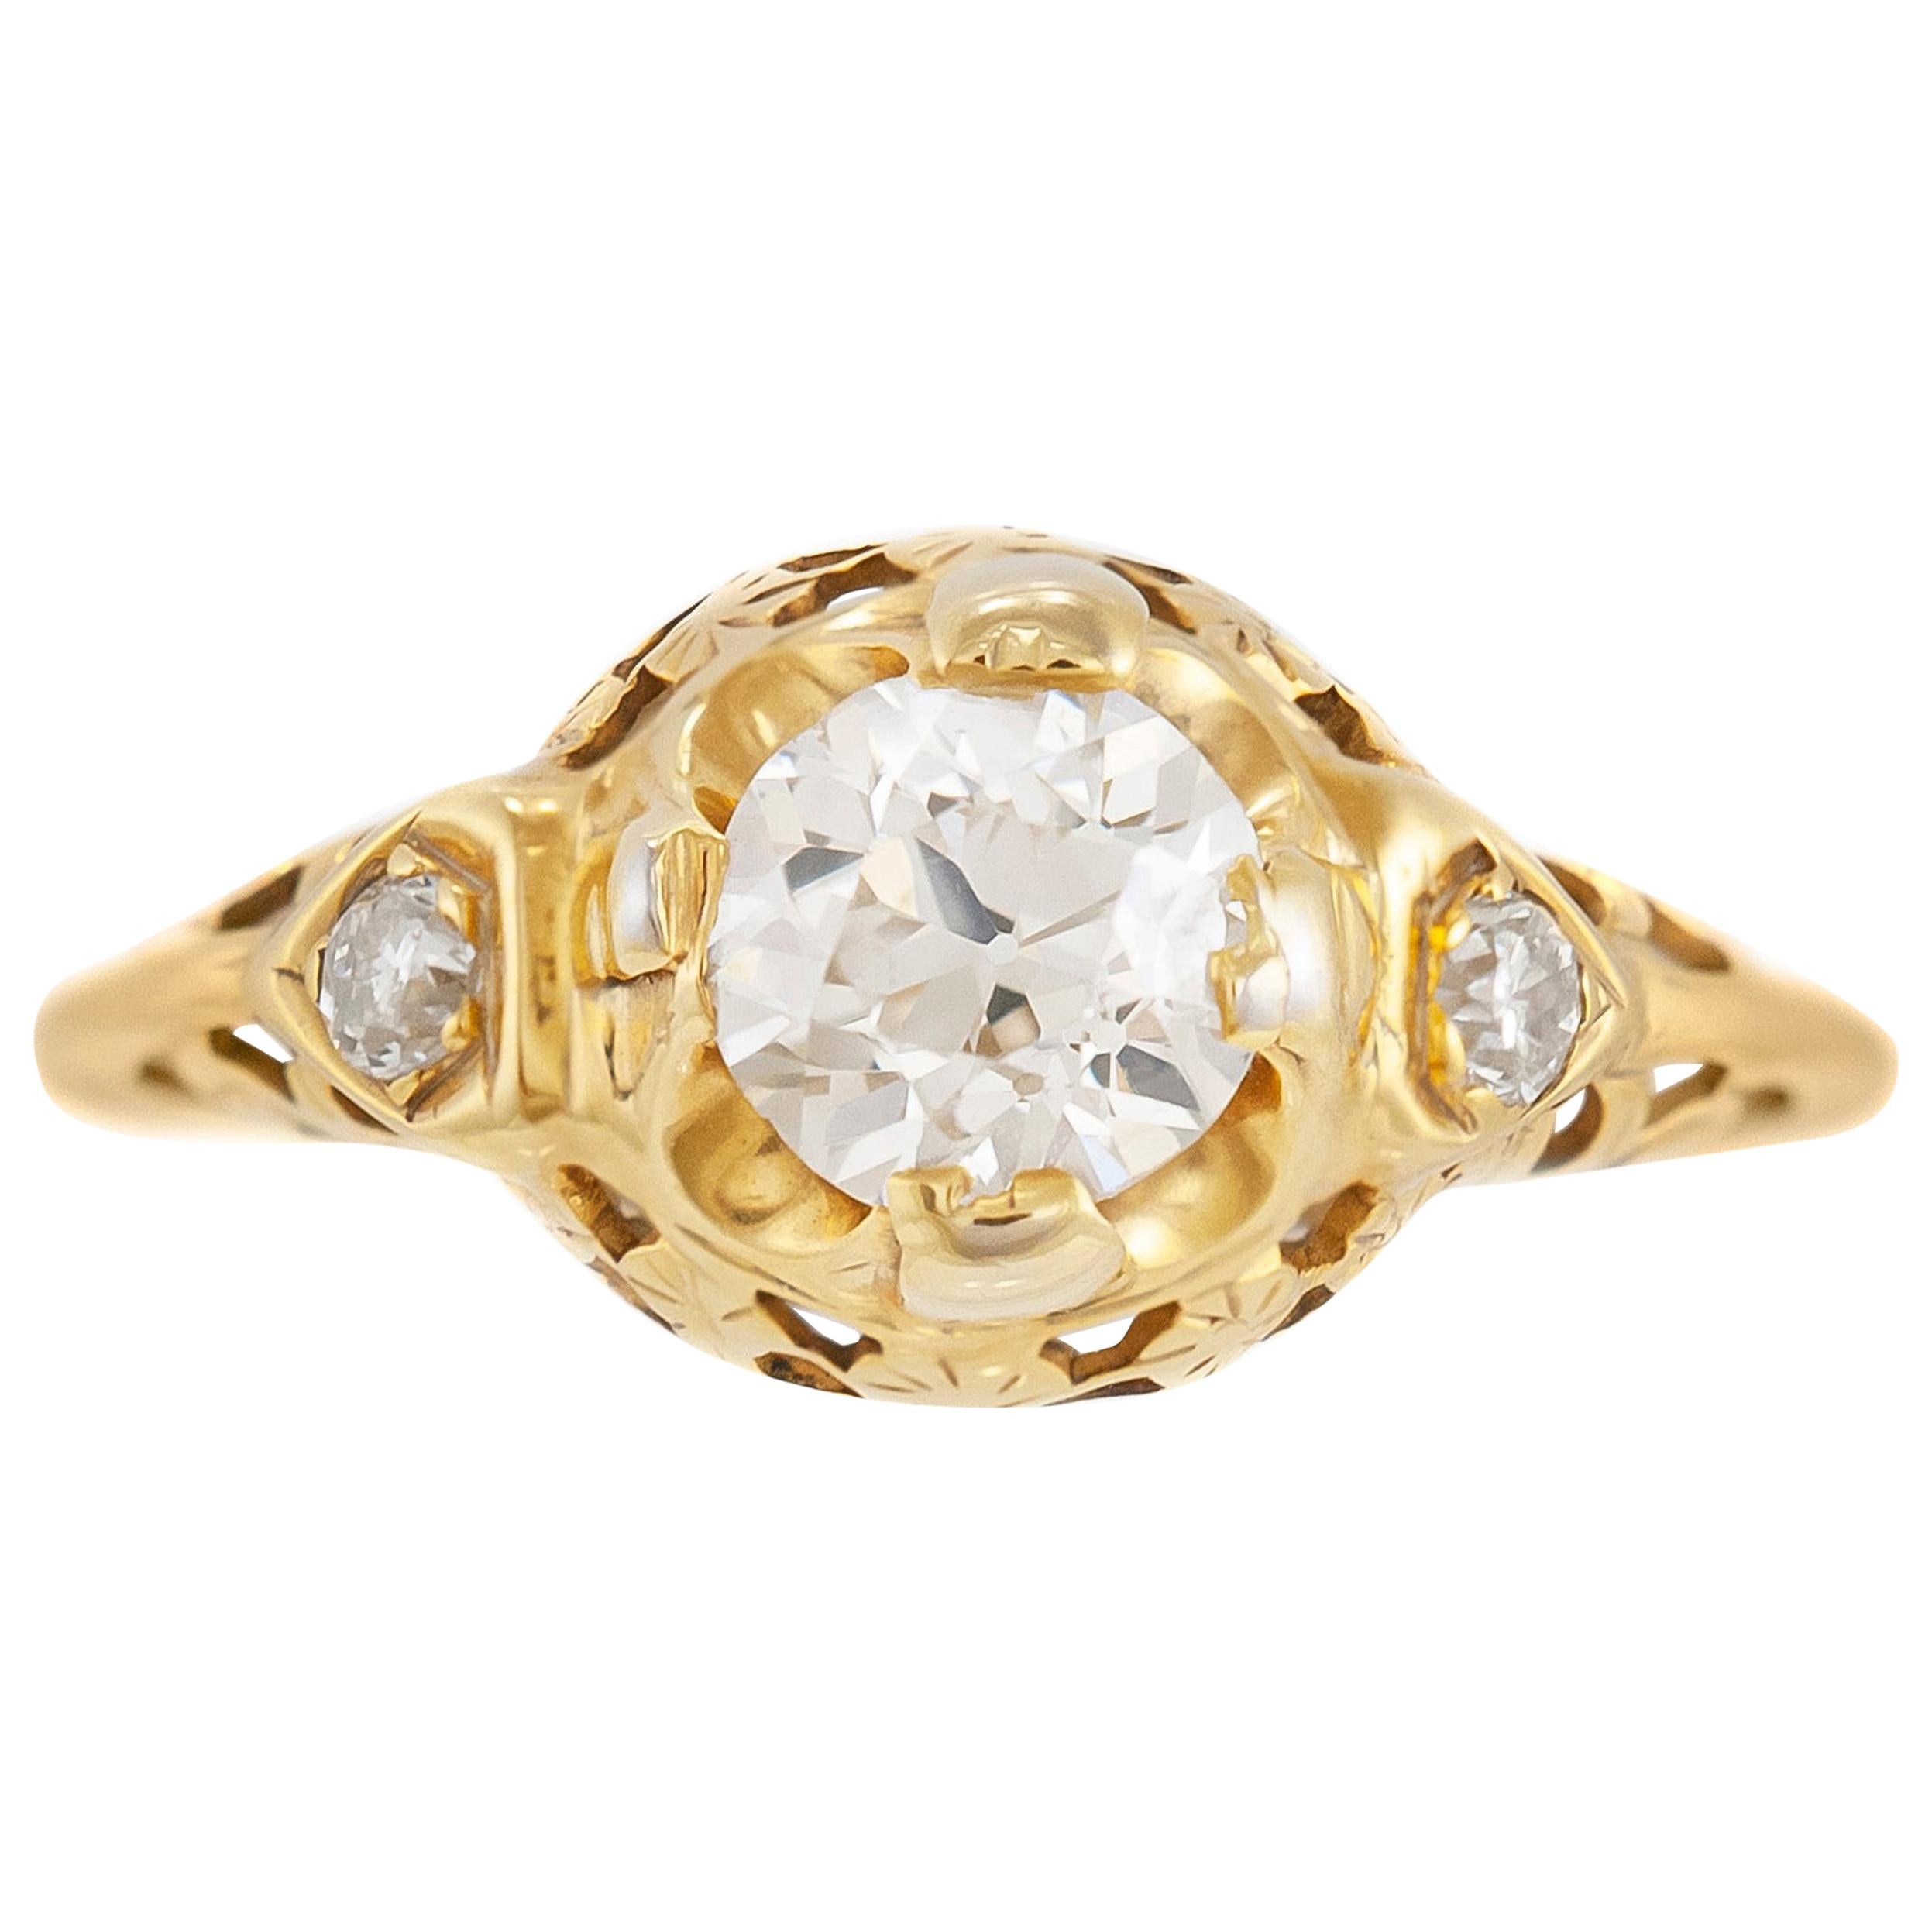 1930s 14 Karat Yellow Gold with 0.80 Carat Diamond Engagement Ring